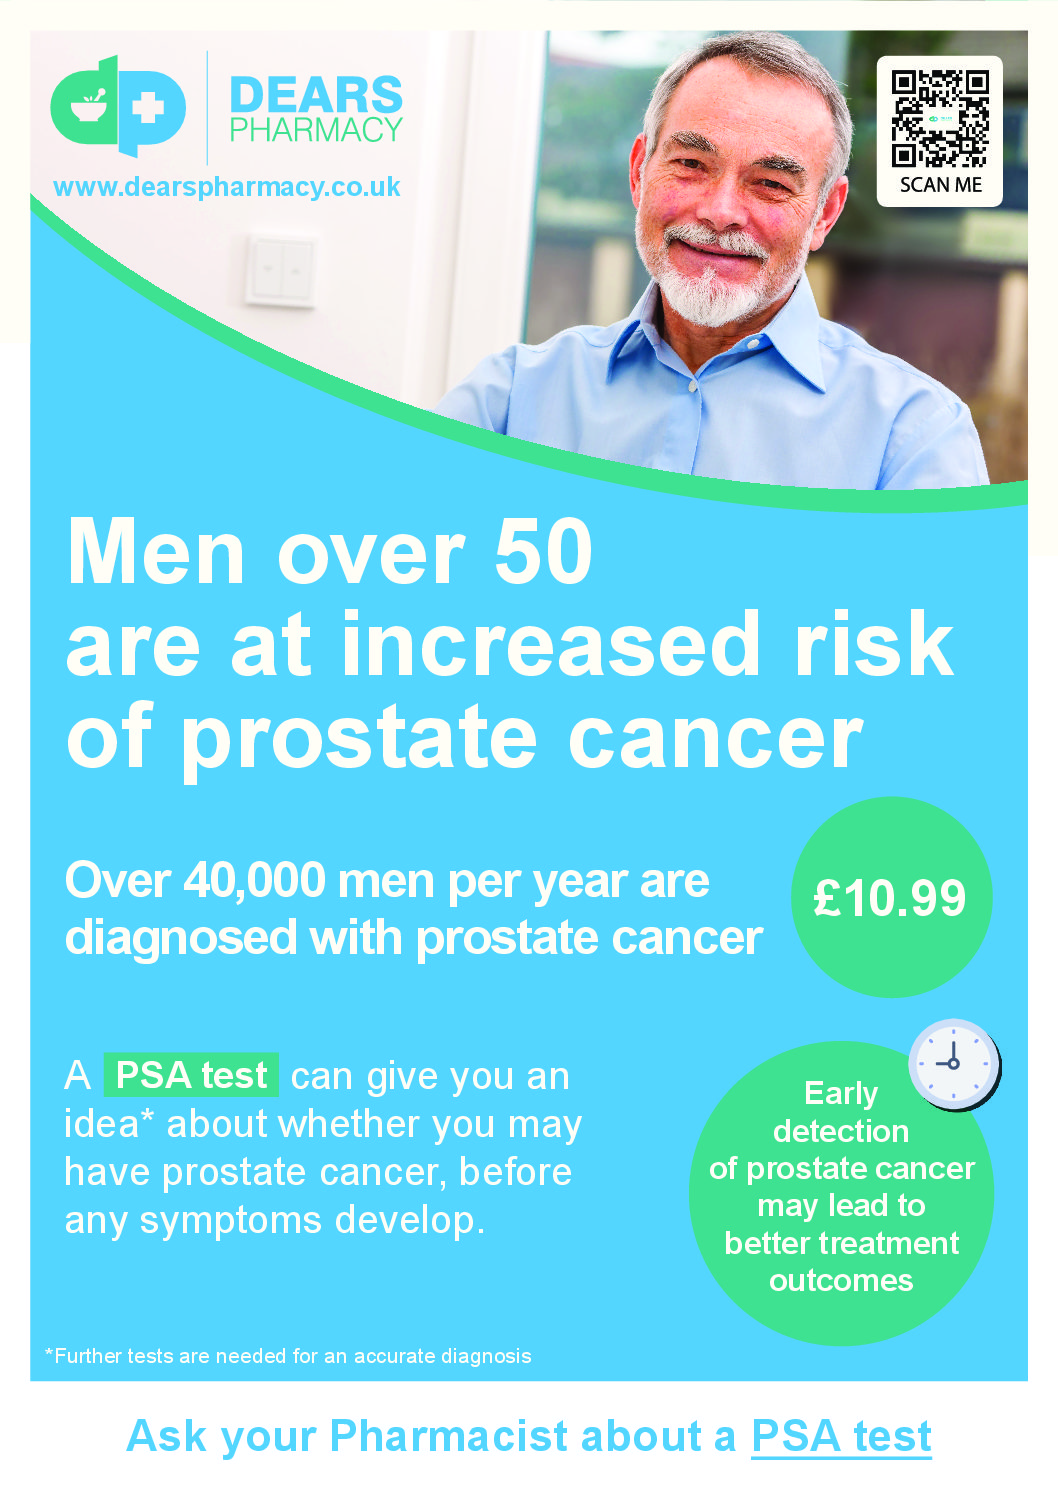 Prostate Specific Antigen Screening Test